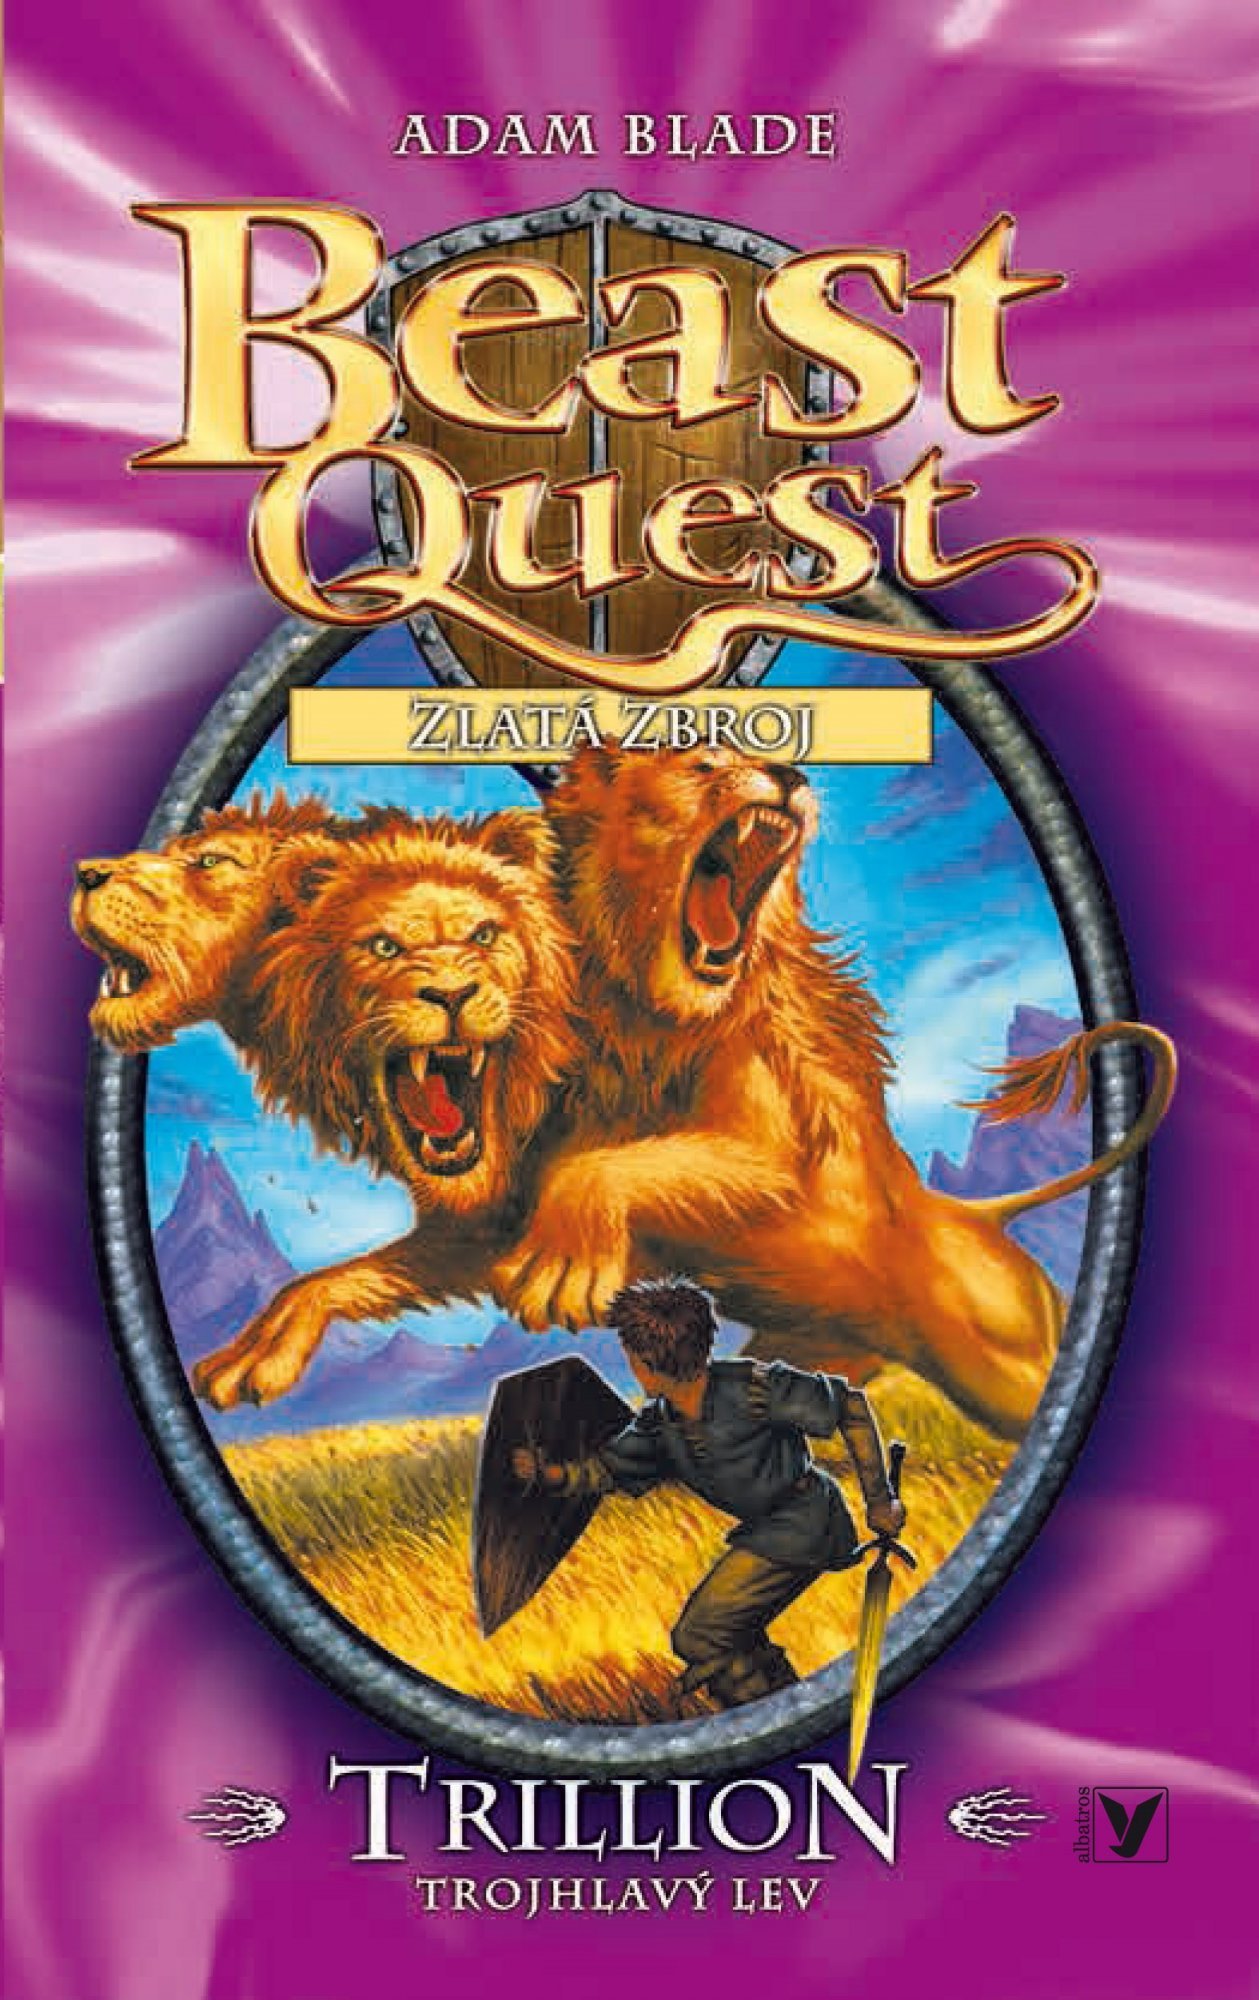 Levně Trillion, trojhlavý lev, Beast Quest (12) - Adam Blade